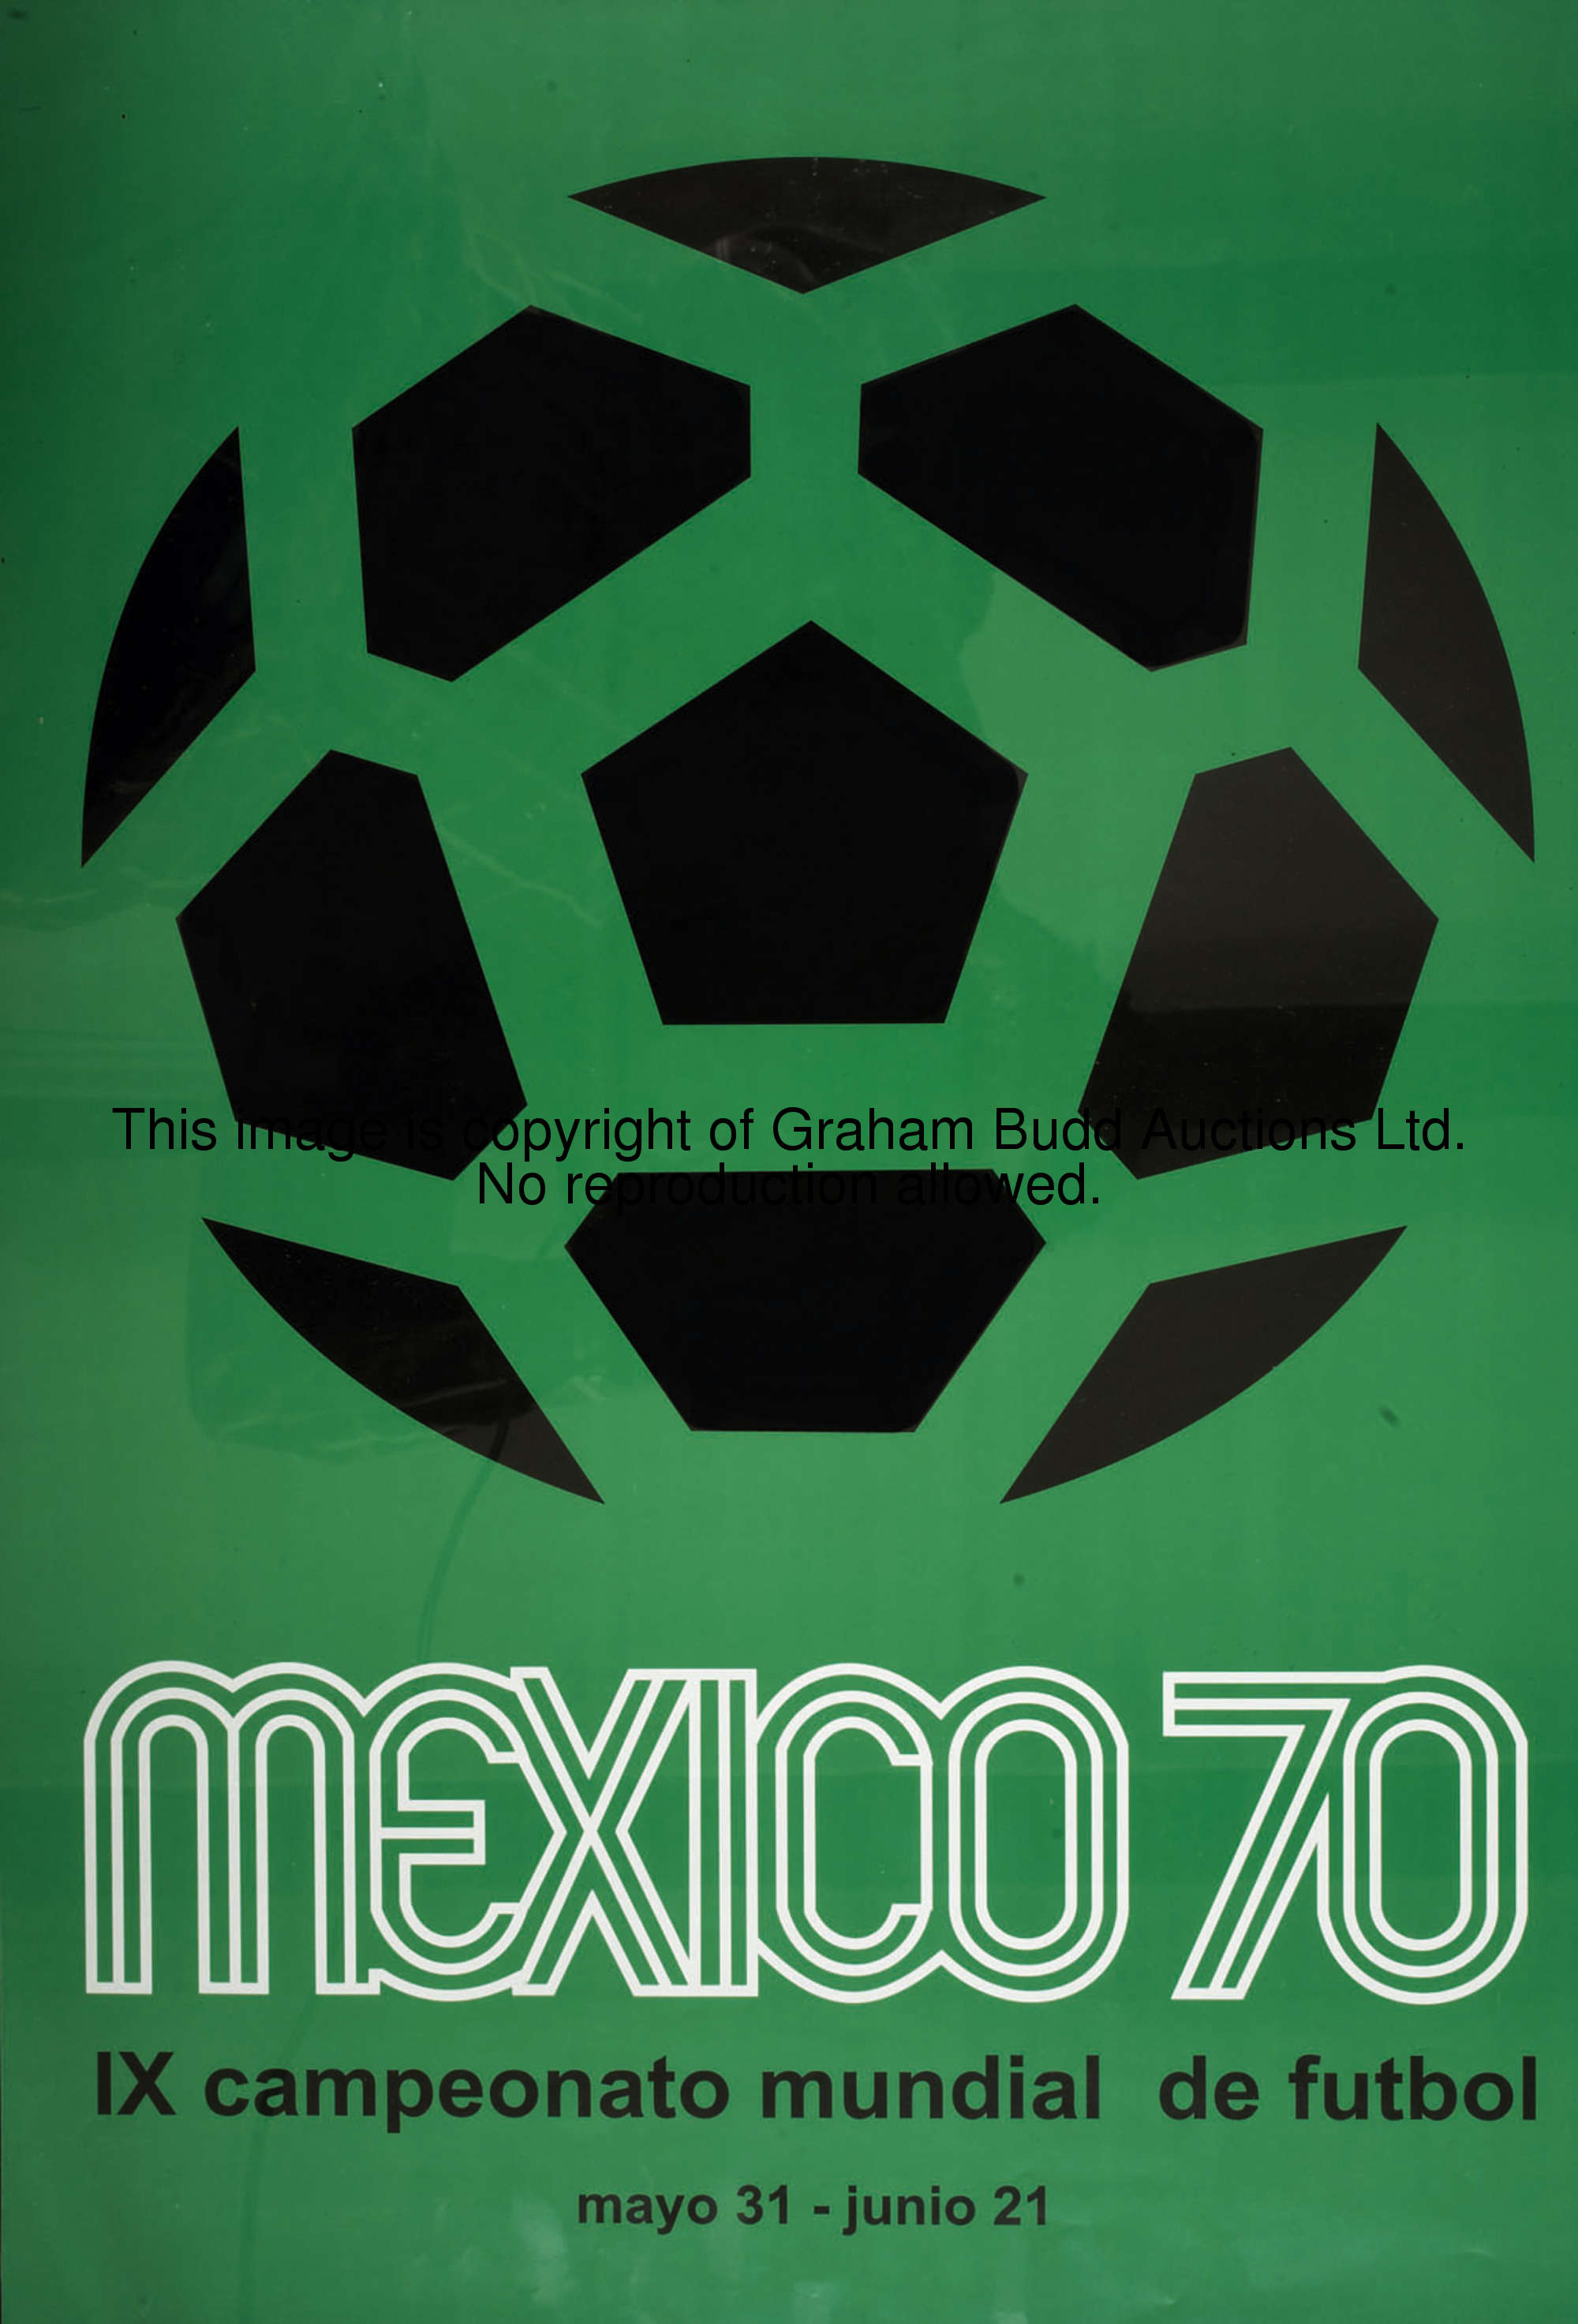 An official poster for the Mexico 1970 World Cup, titled Mexico '70 IX Campeonato Mundial de Futbol,...